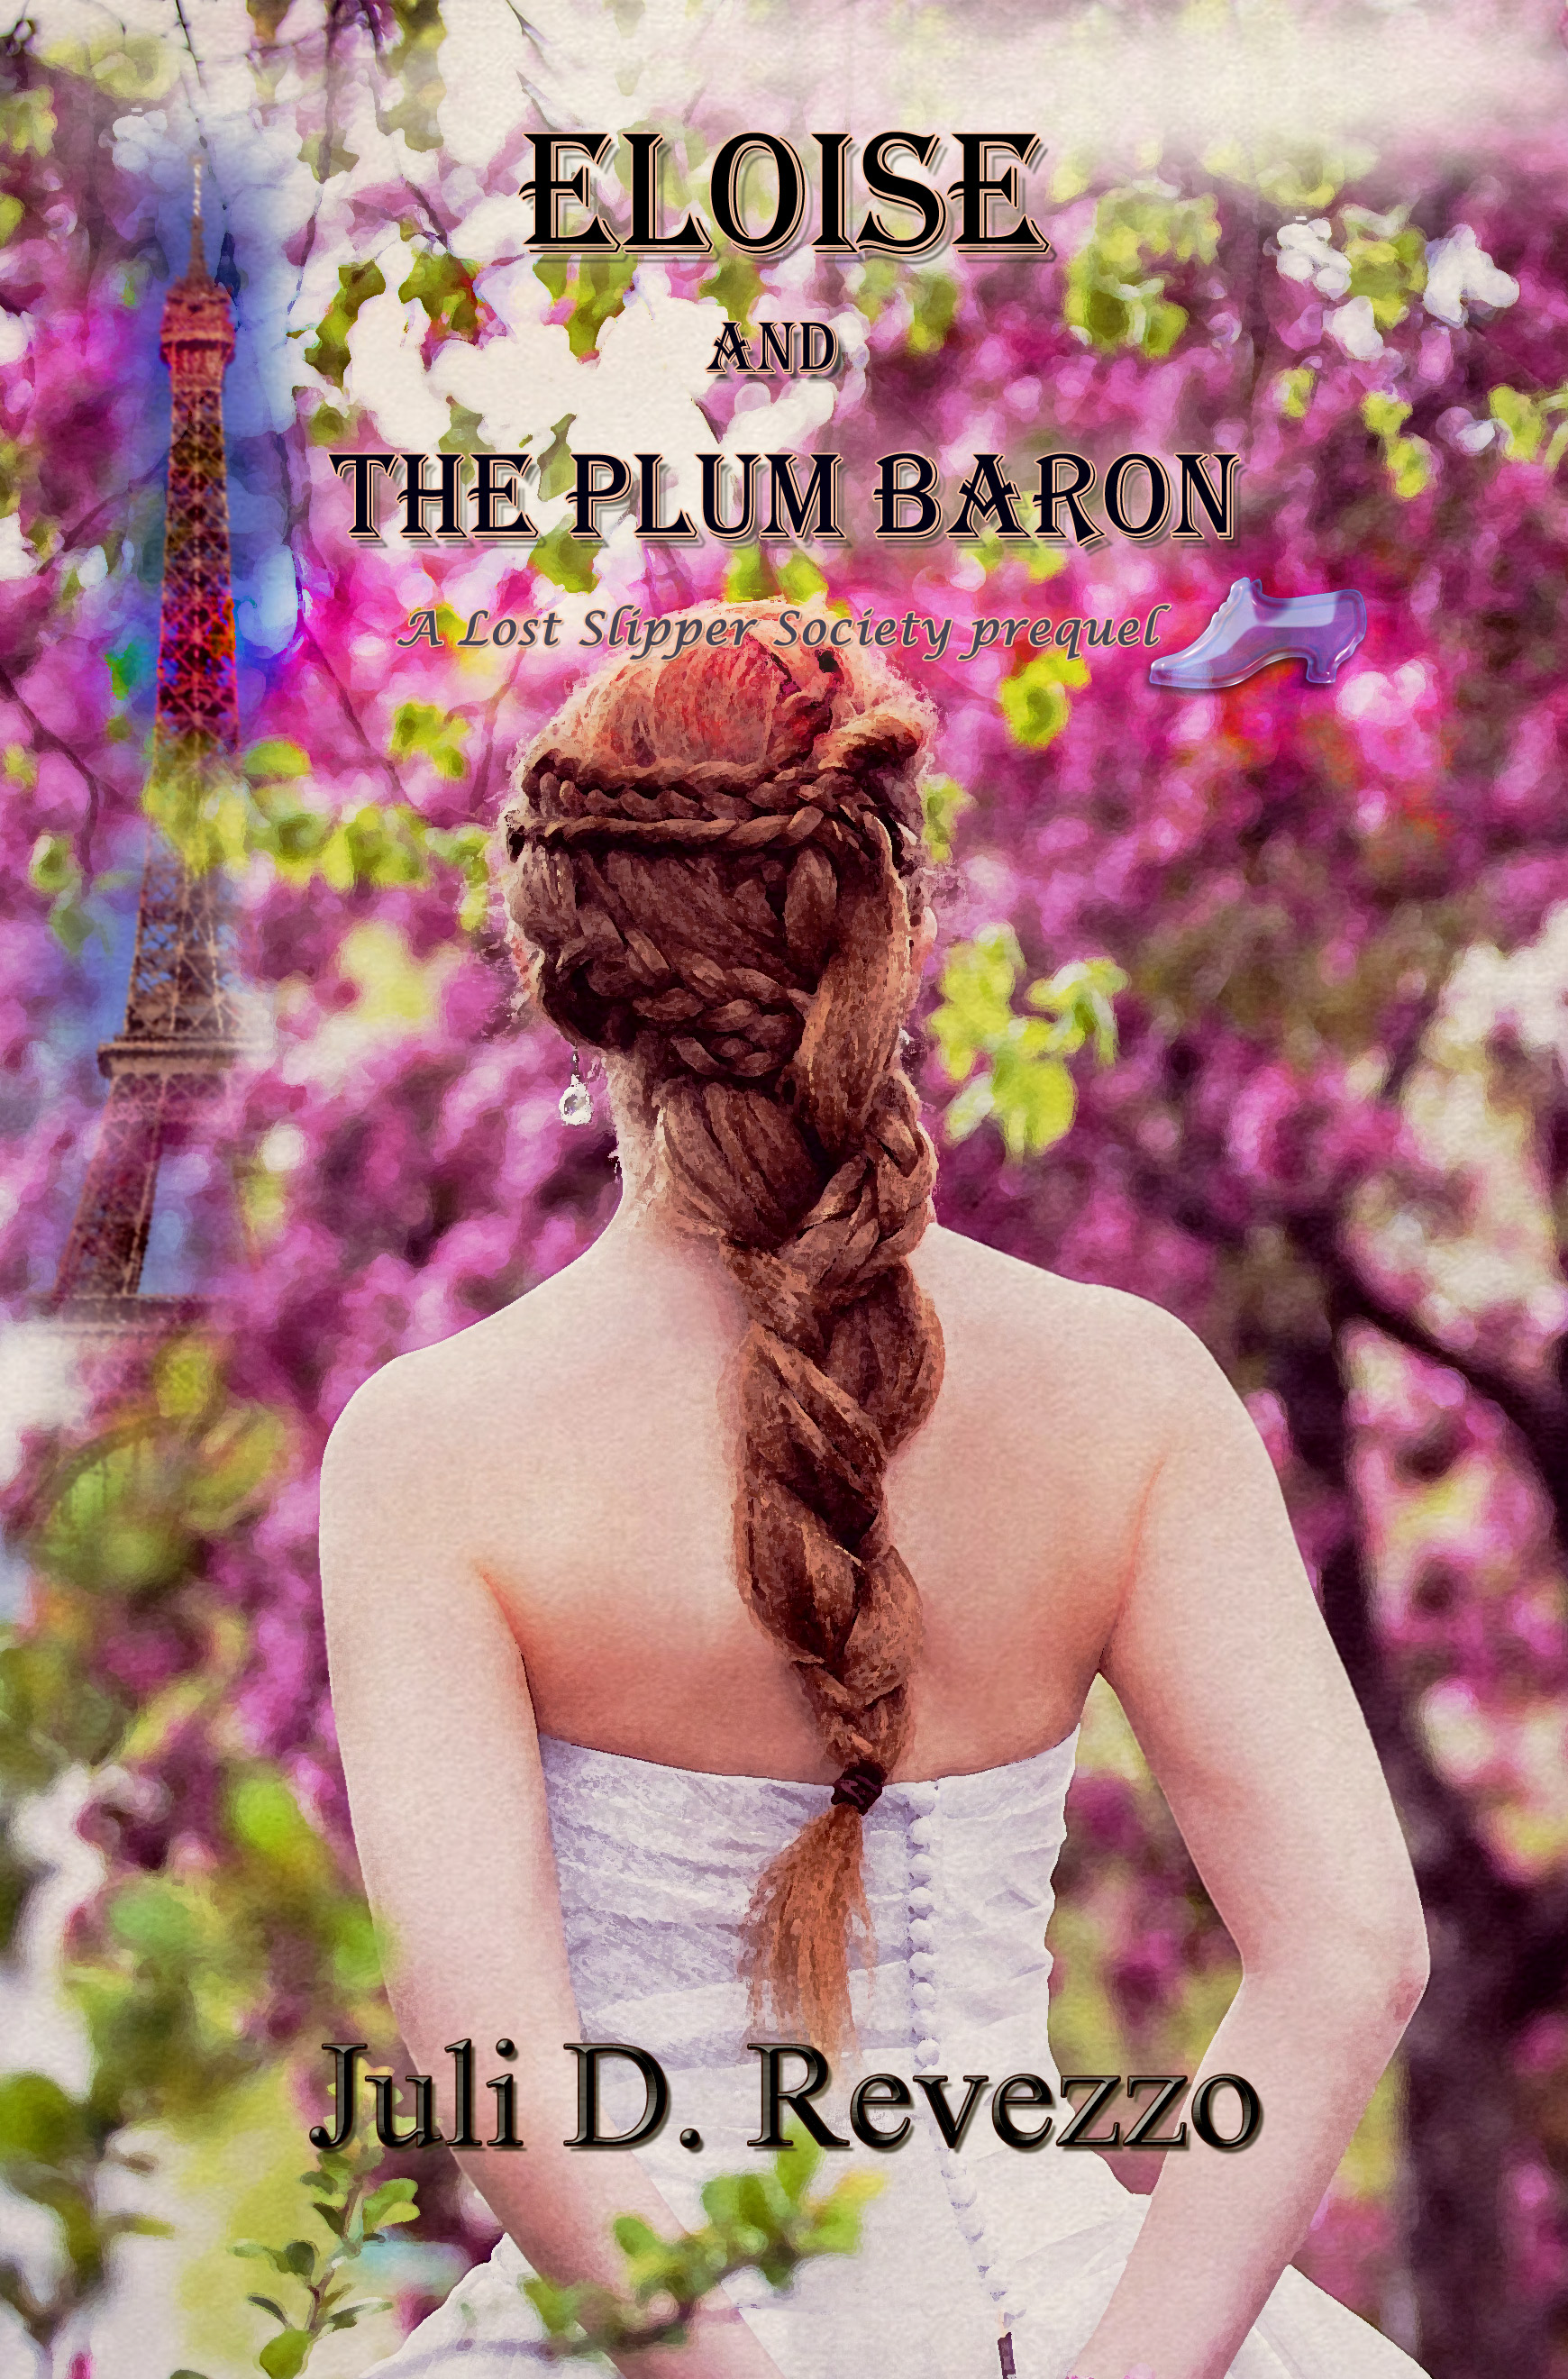 Eloise and the Plum Baron, historical romance, cover art, Juli D. Revezzo